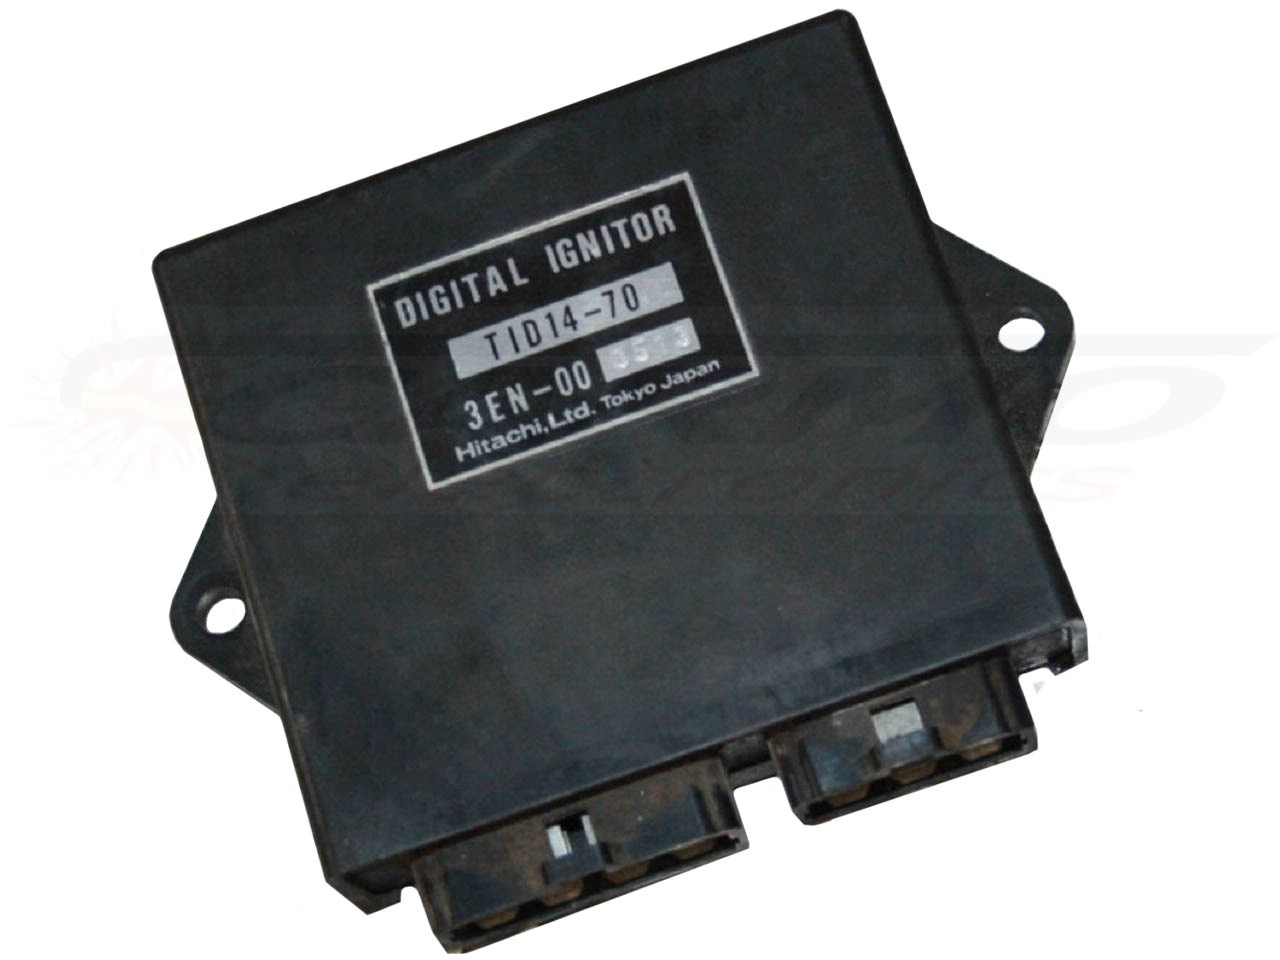 FZR400 Exup igniter ignition module CDI TCI Box (TID14-70, 3EN-00)